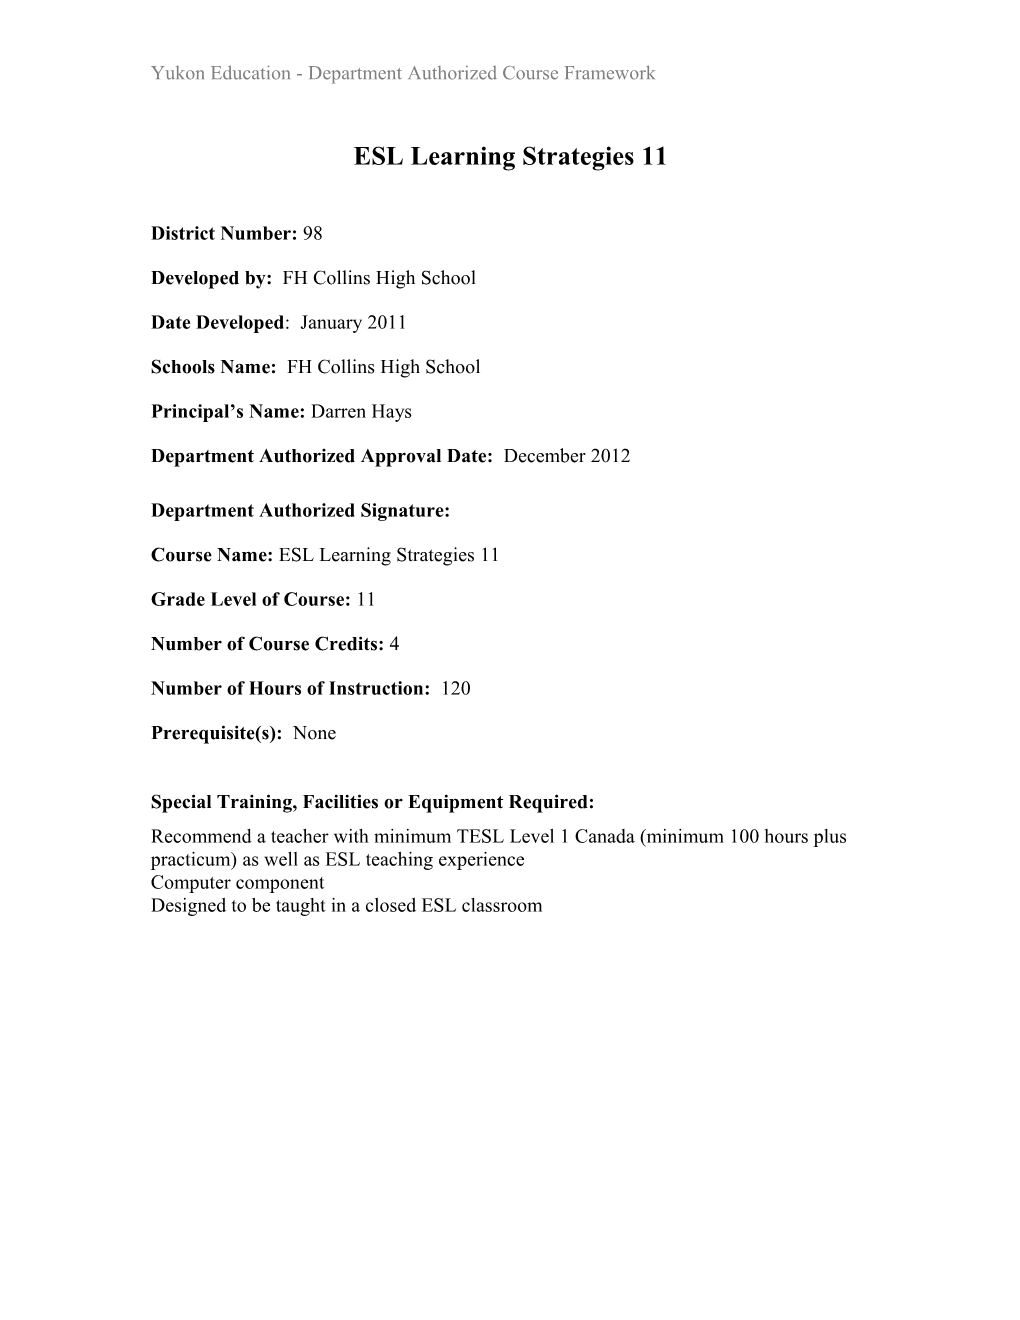 BAA Course: ESL Learning Strategies 11